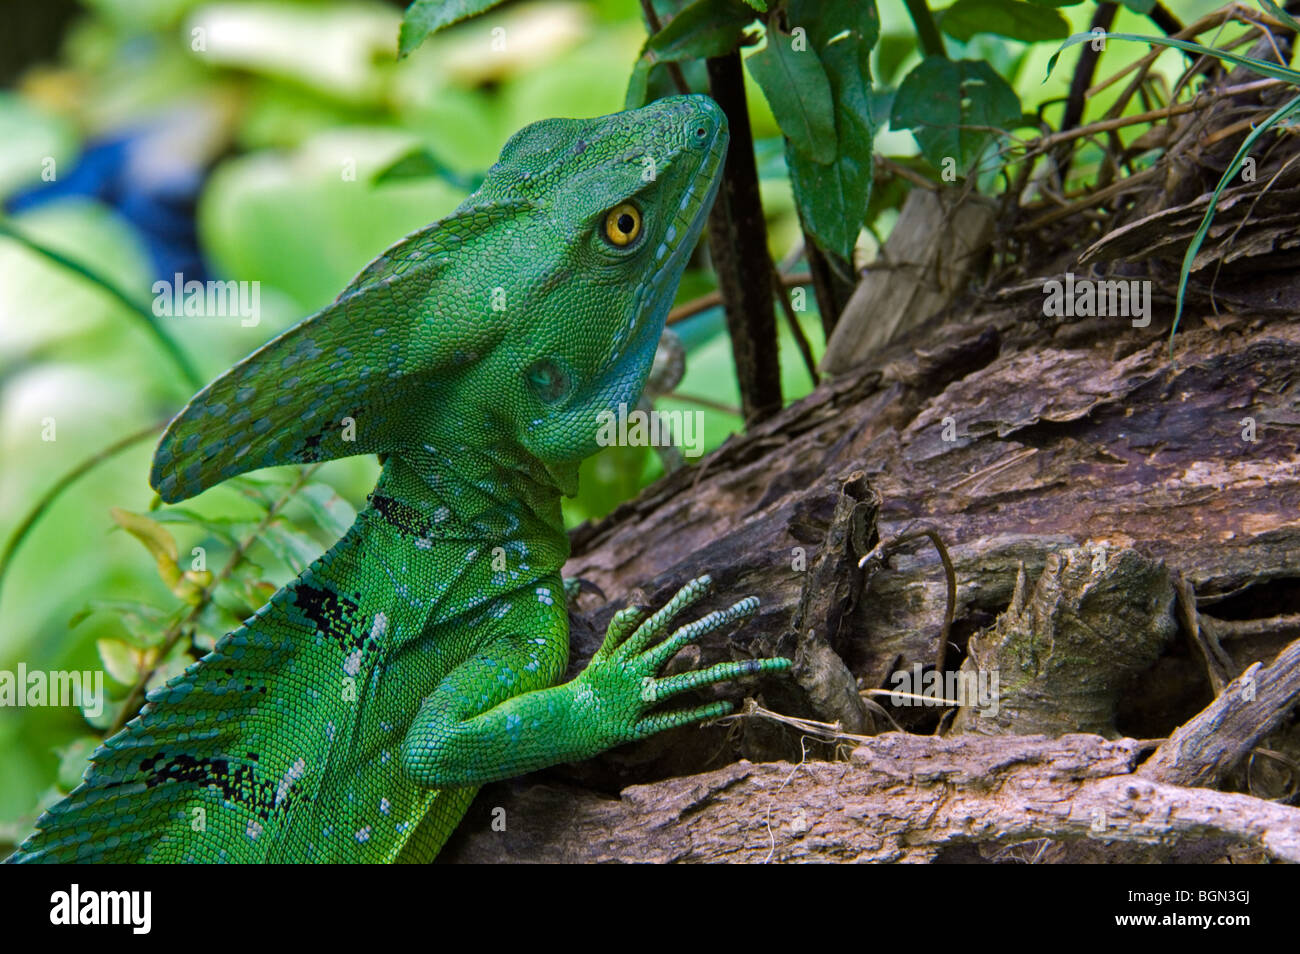 Emerald or Green crested basilisk (Basiliscus plumifrons) near water's edge, Costa Rica Stock Photo